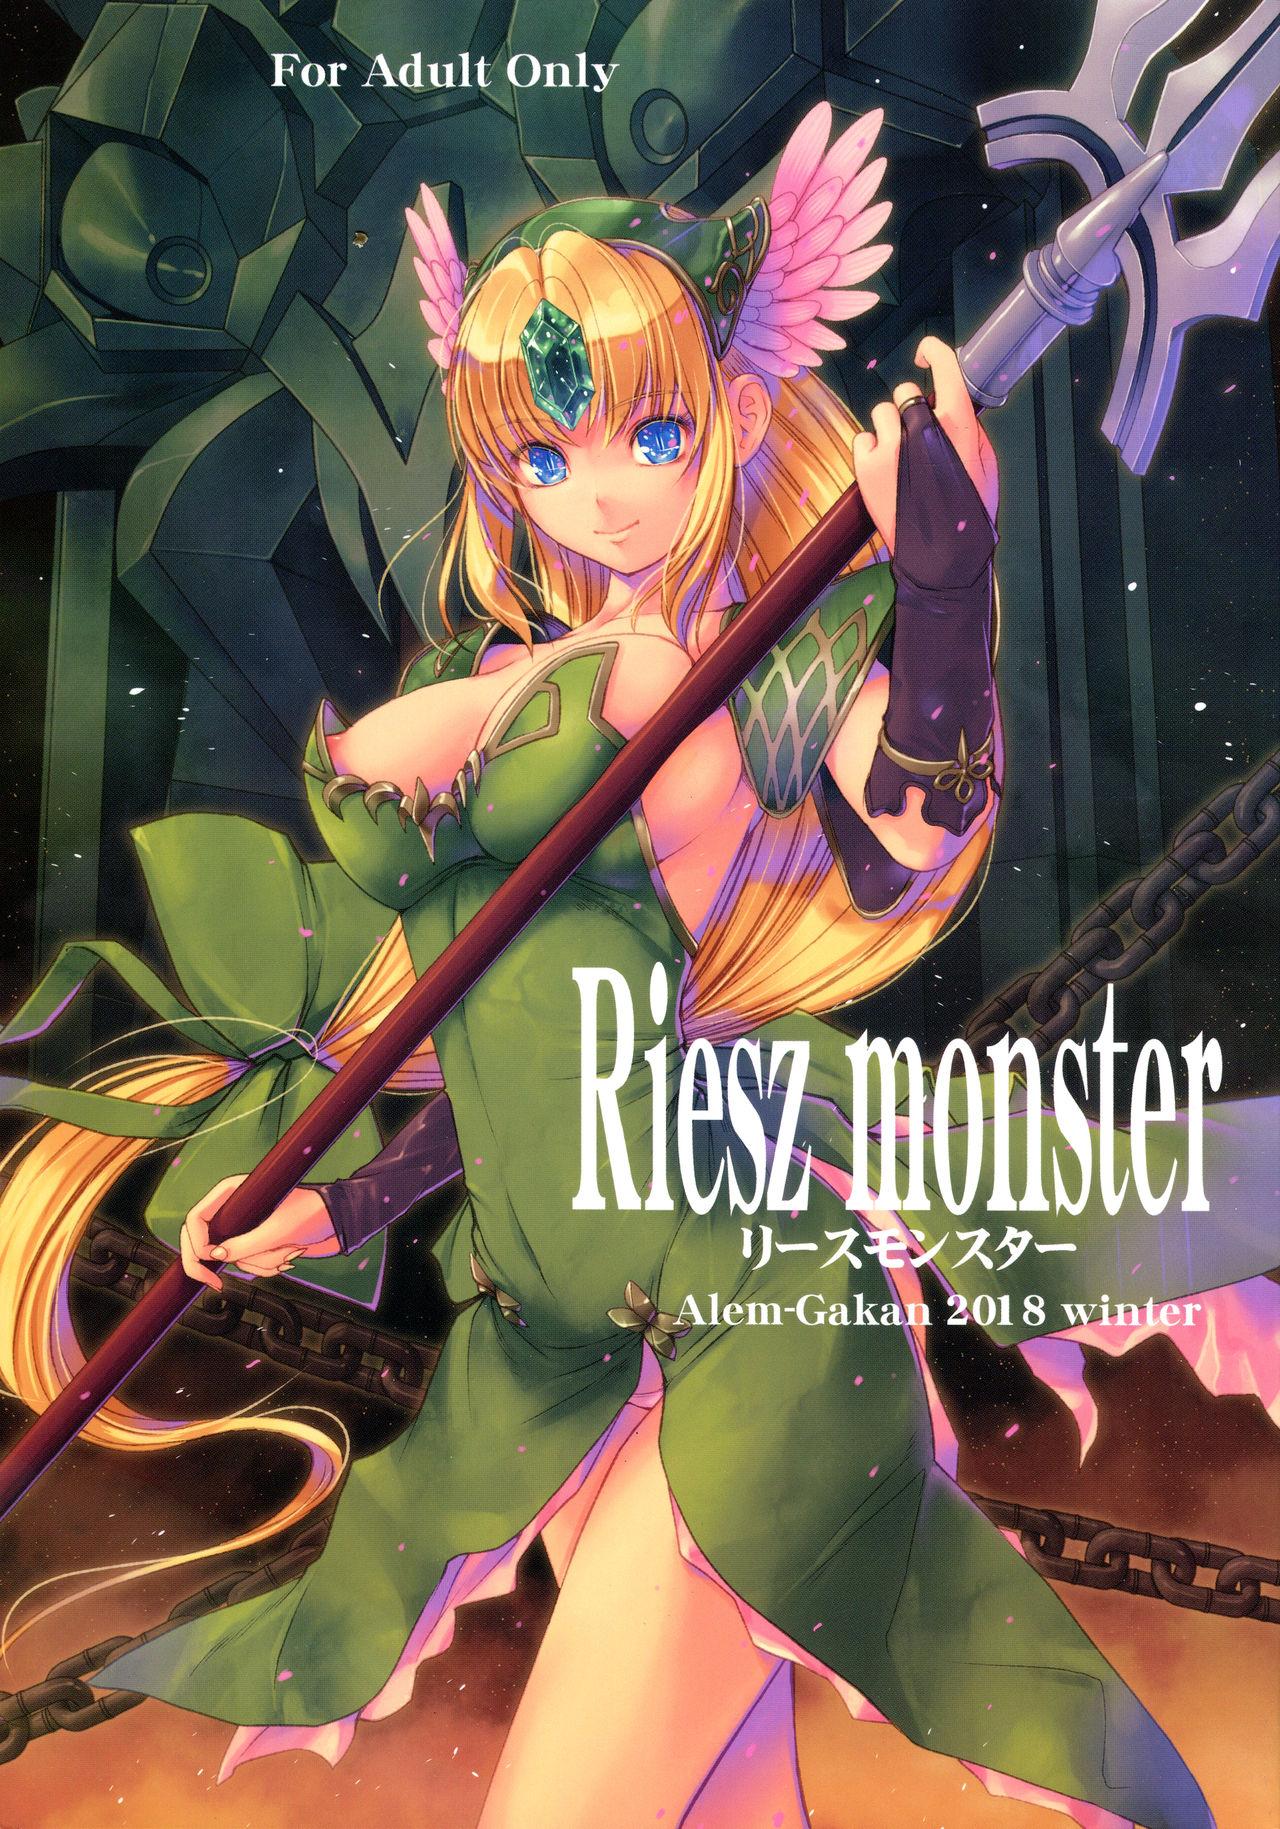 Dirty Riesz monster - Seiken densetsu 3 3some - Picture 1